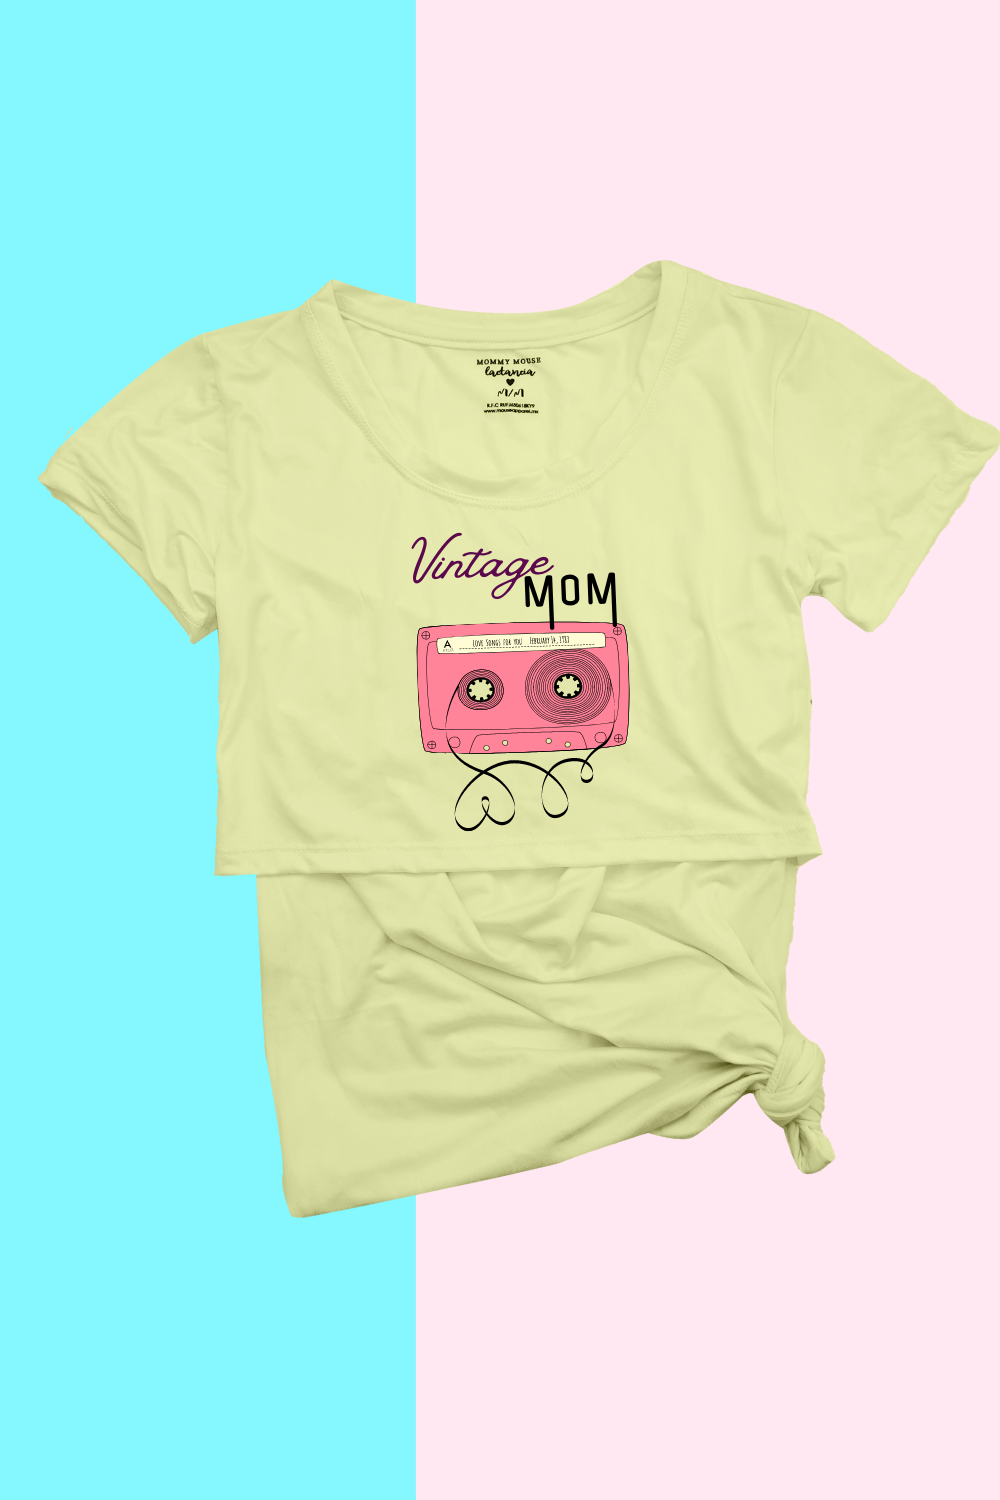 Blusa maternidad-lactancia mc estampada. Vintage mom